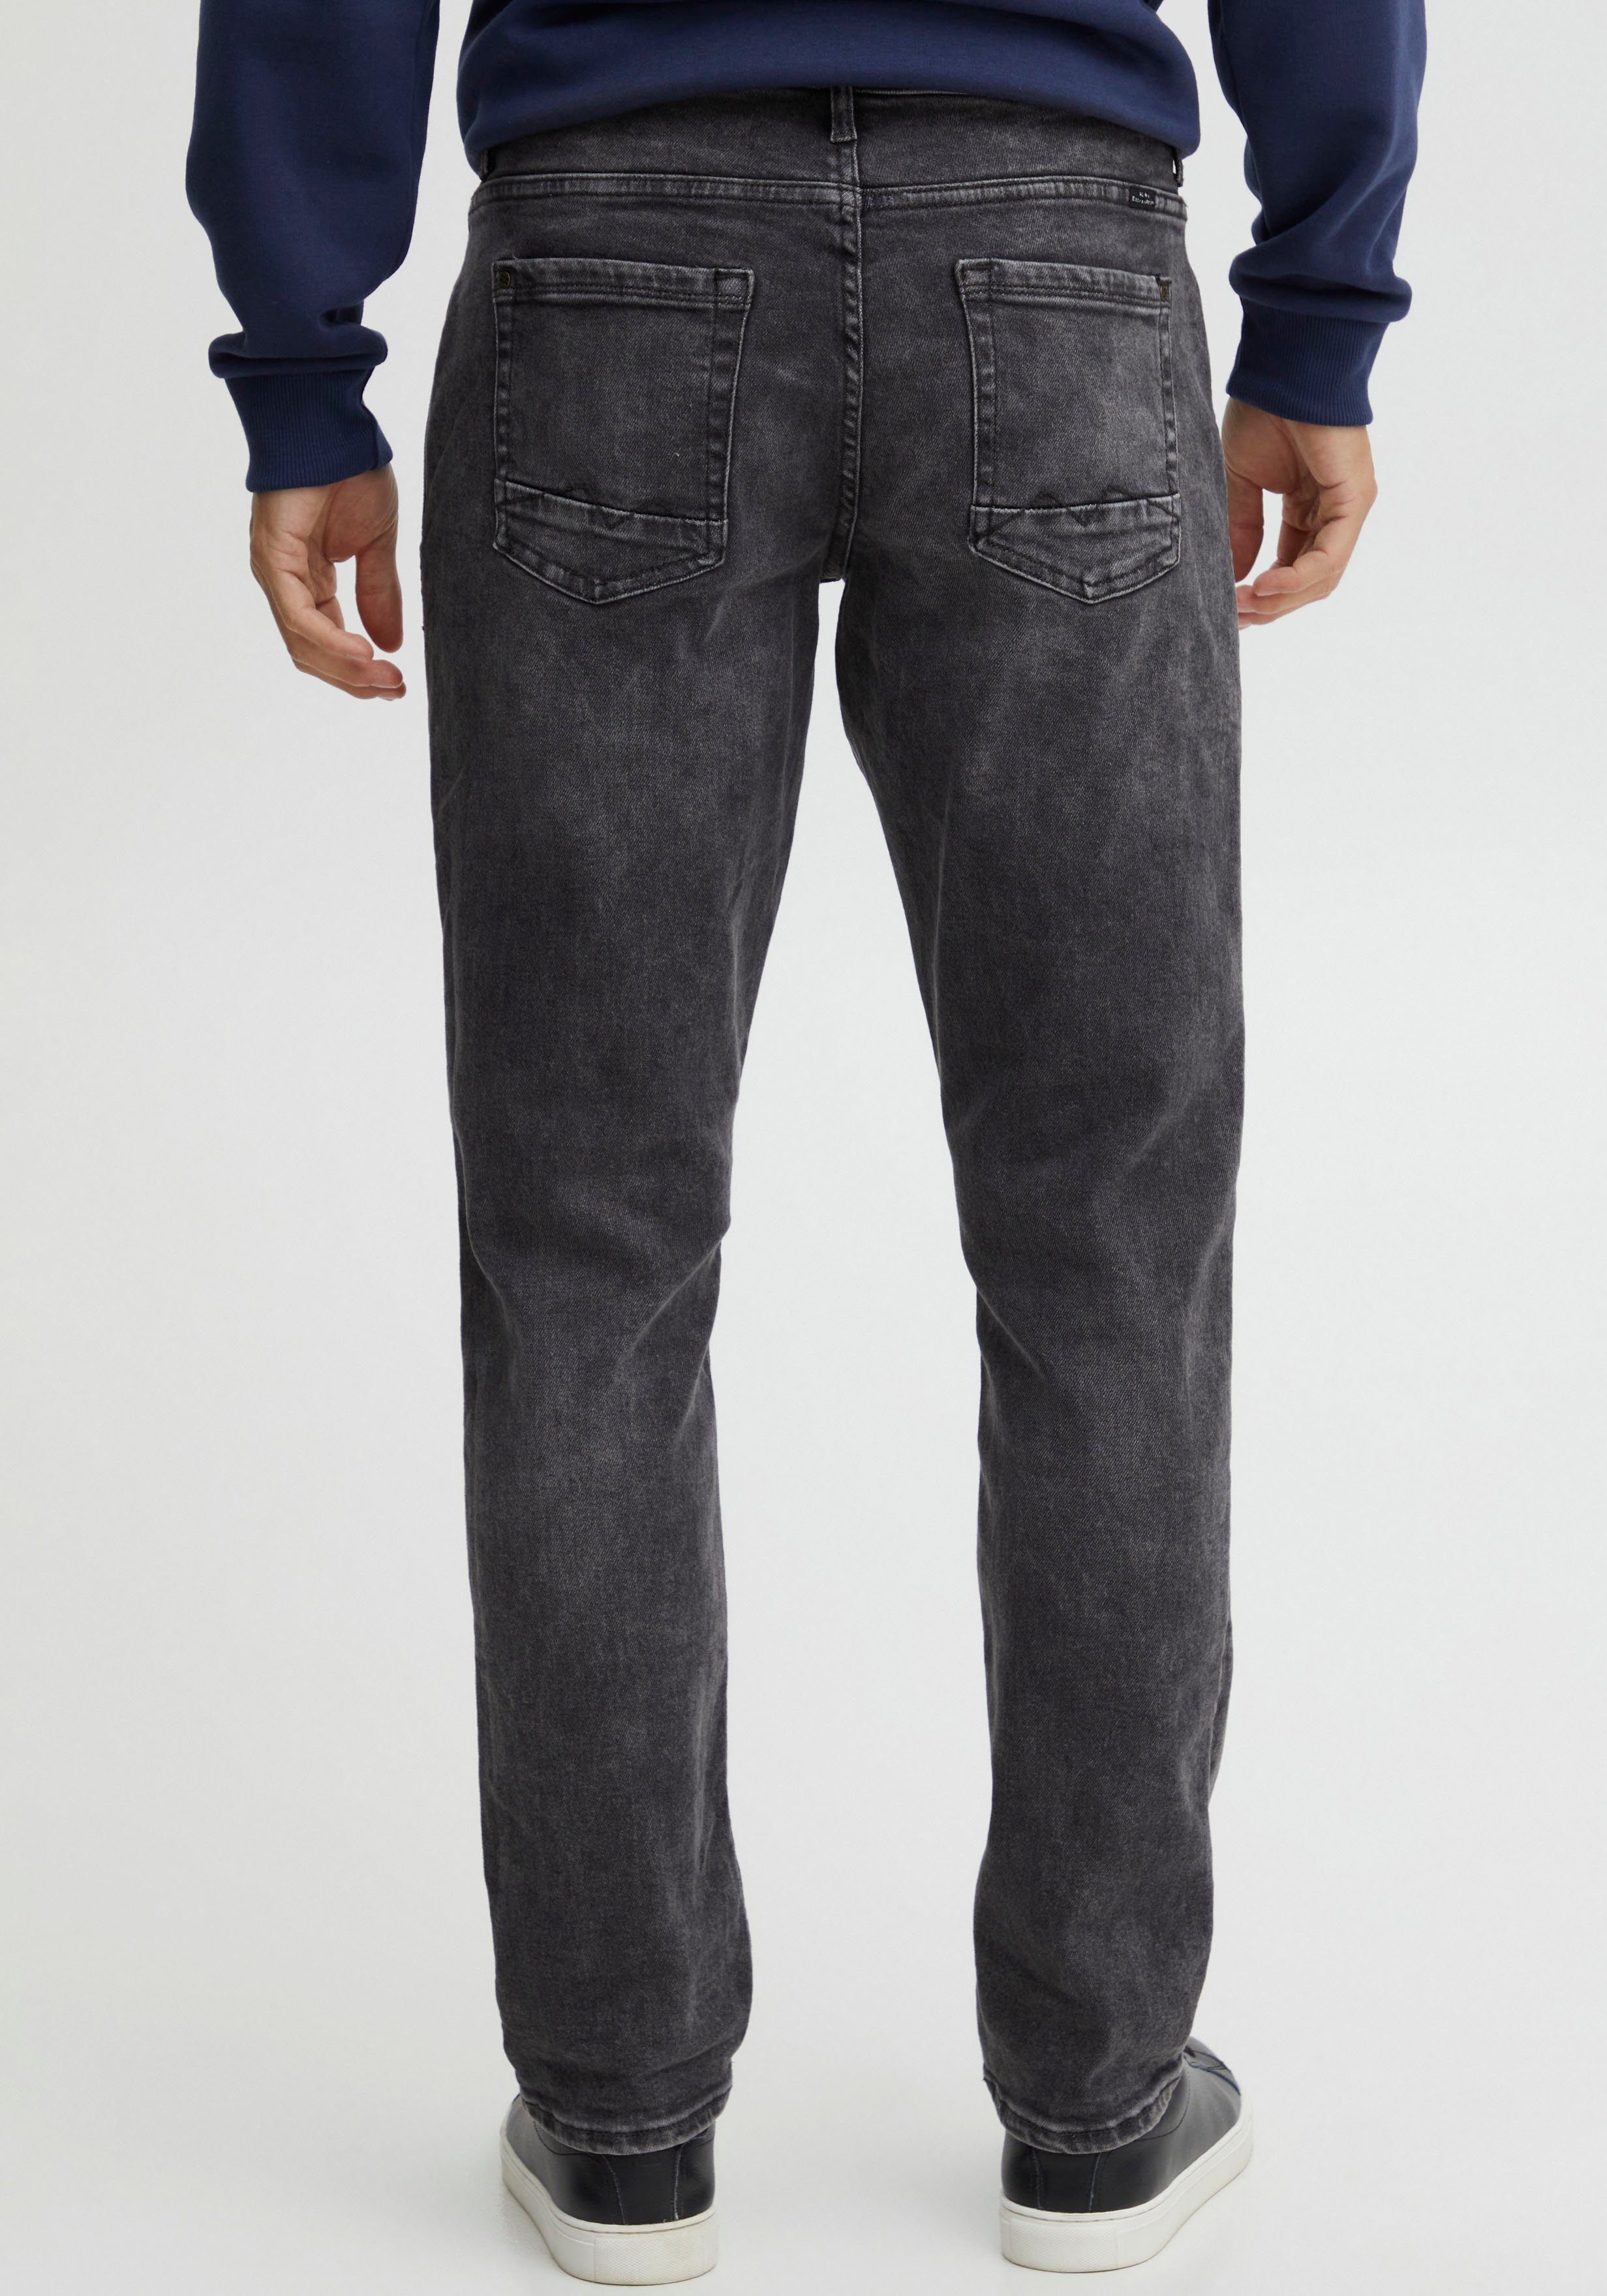 Blend 5-Pocket-Jeans Blizzard Multiflex BL grey Jeans